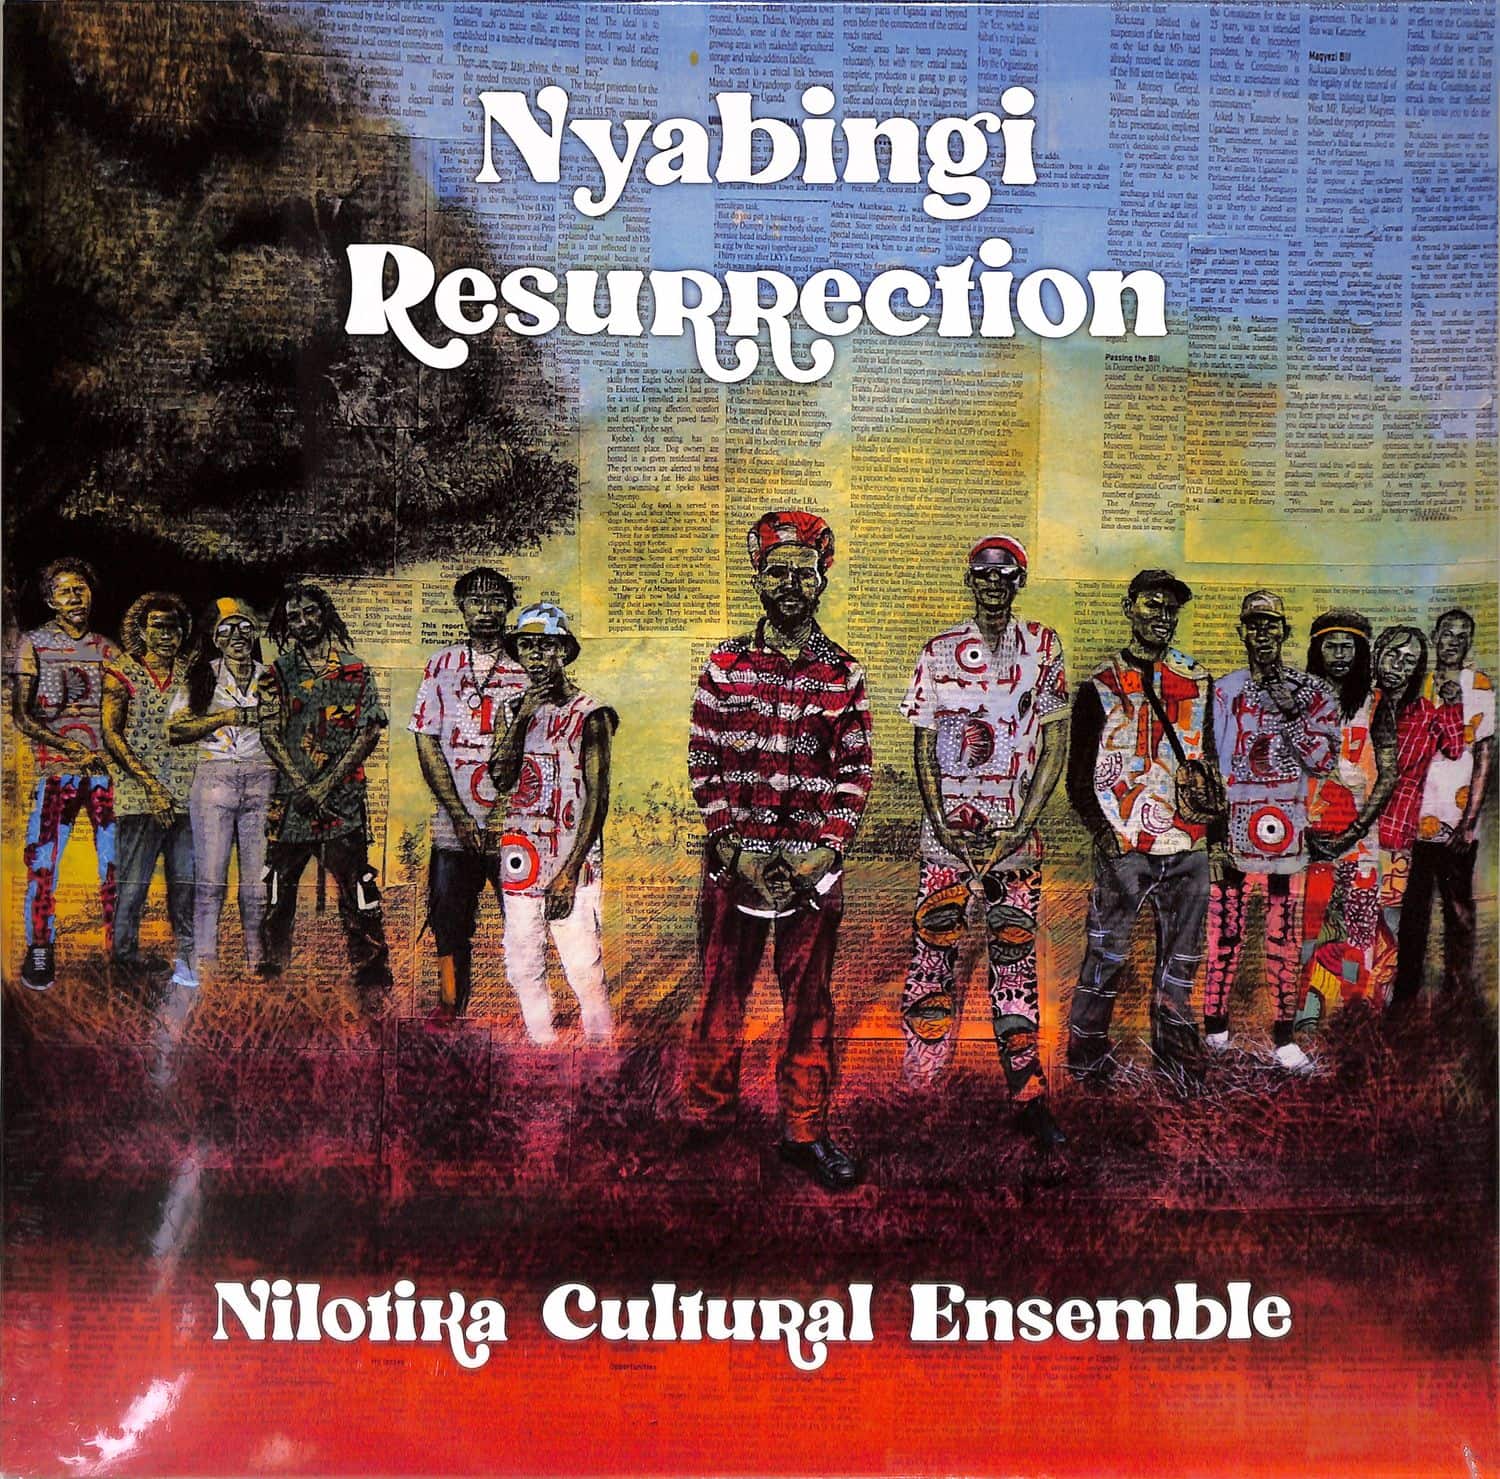 Nilotika Cultural Ensemble - NYABINGI RESURRECTION 